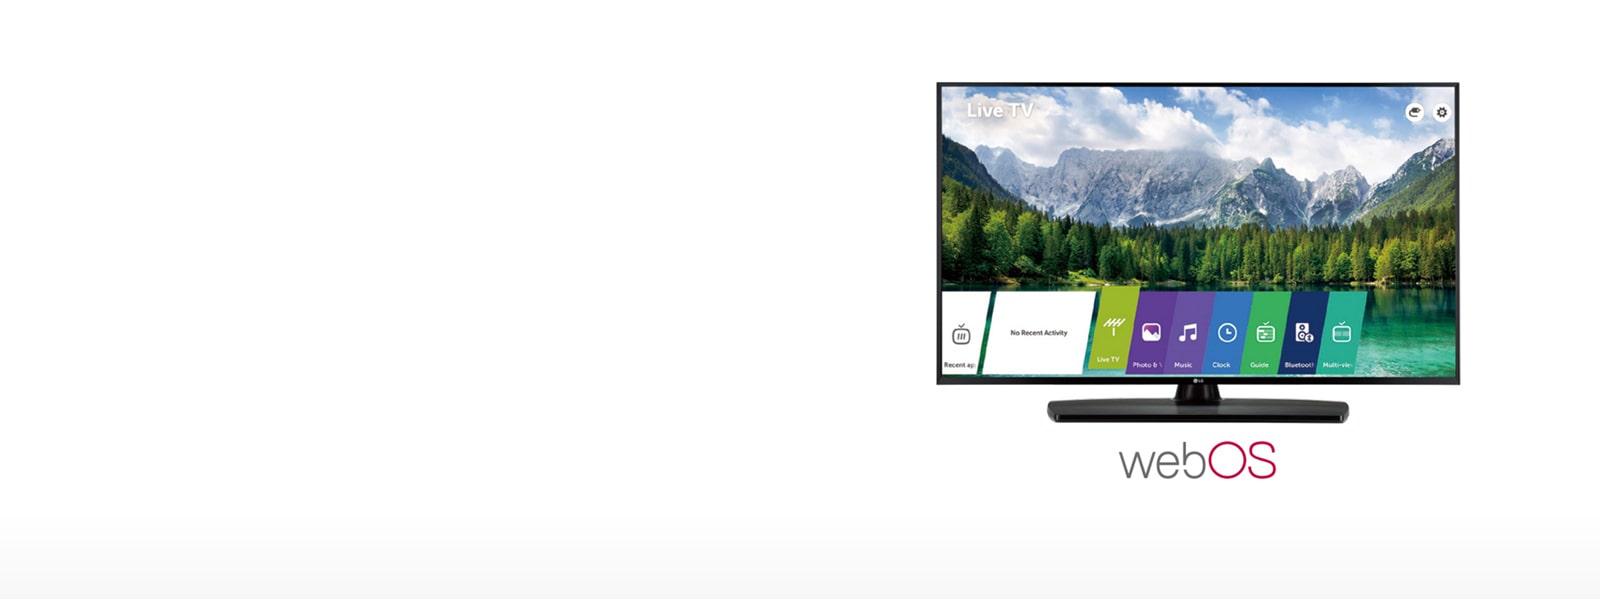 Smart TV của LG webOS 4.51